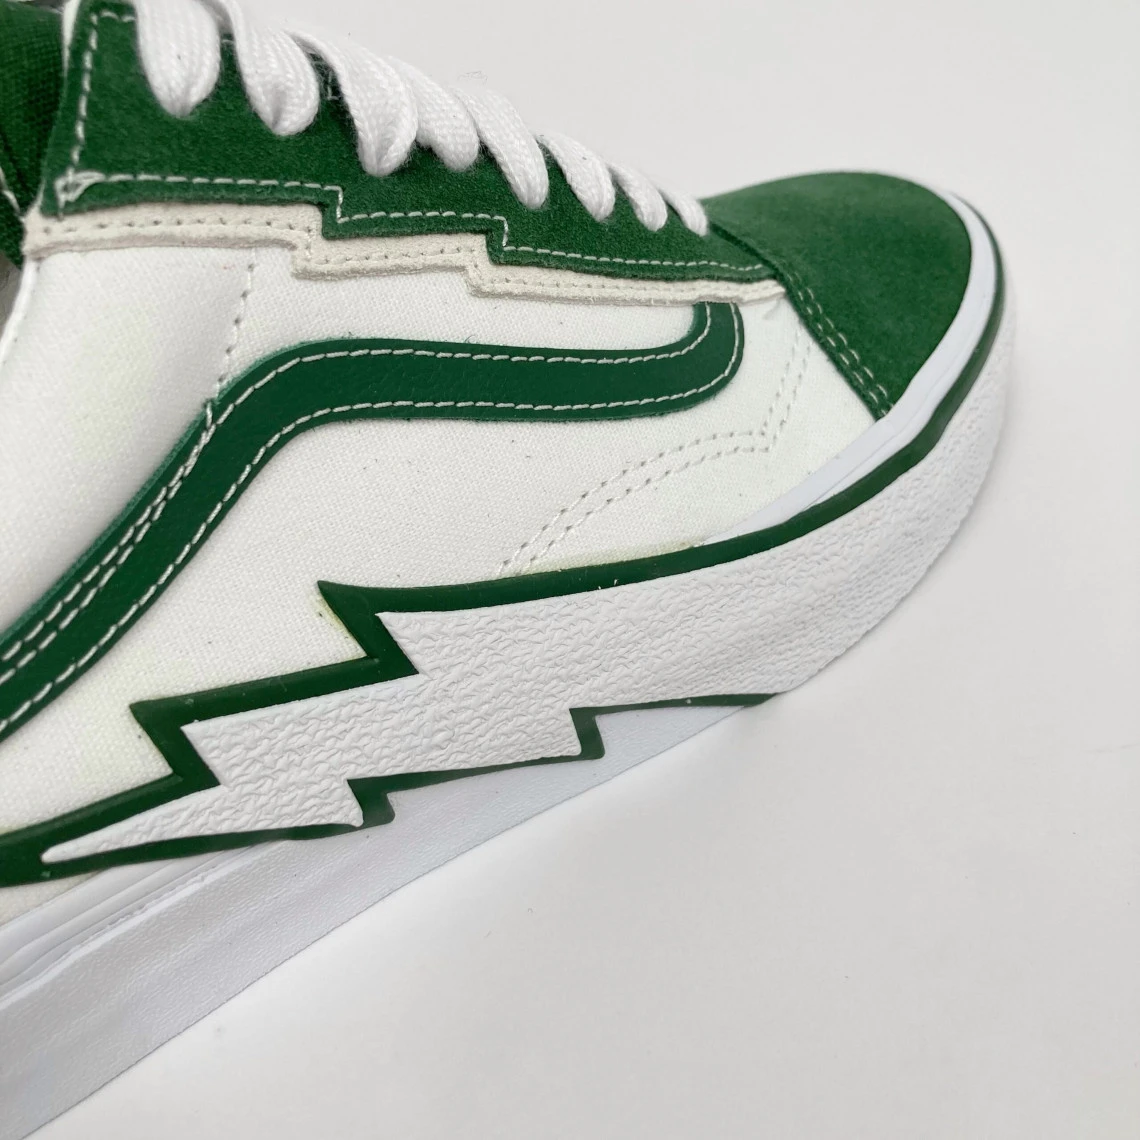 Vans Introduces Lightning Bolts on the Old Skool Sneaker